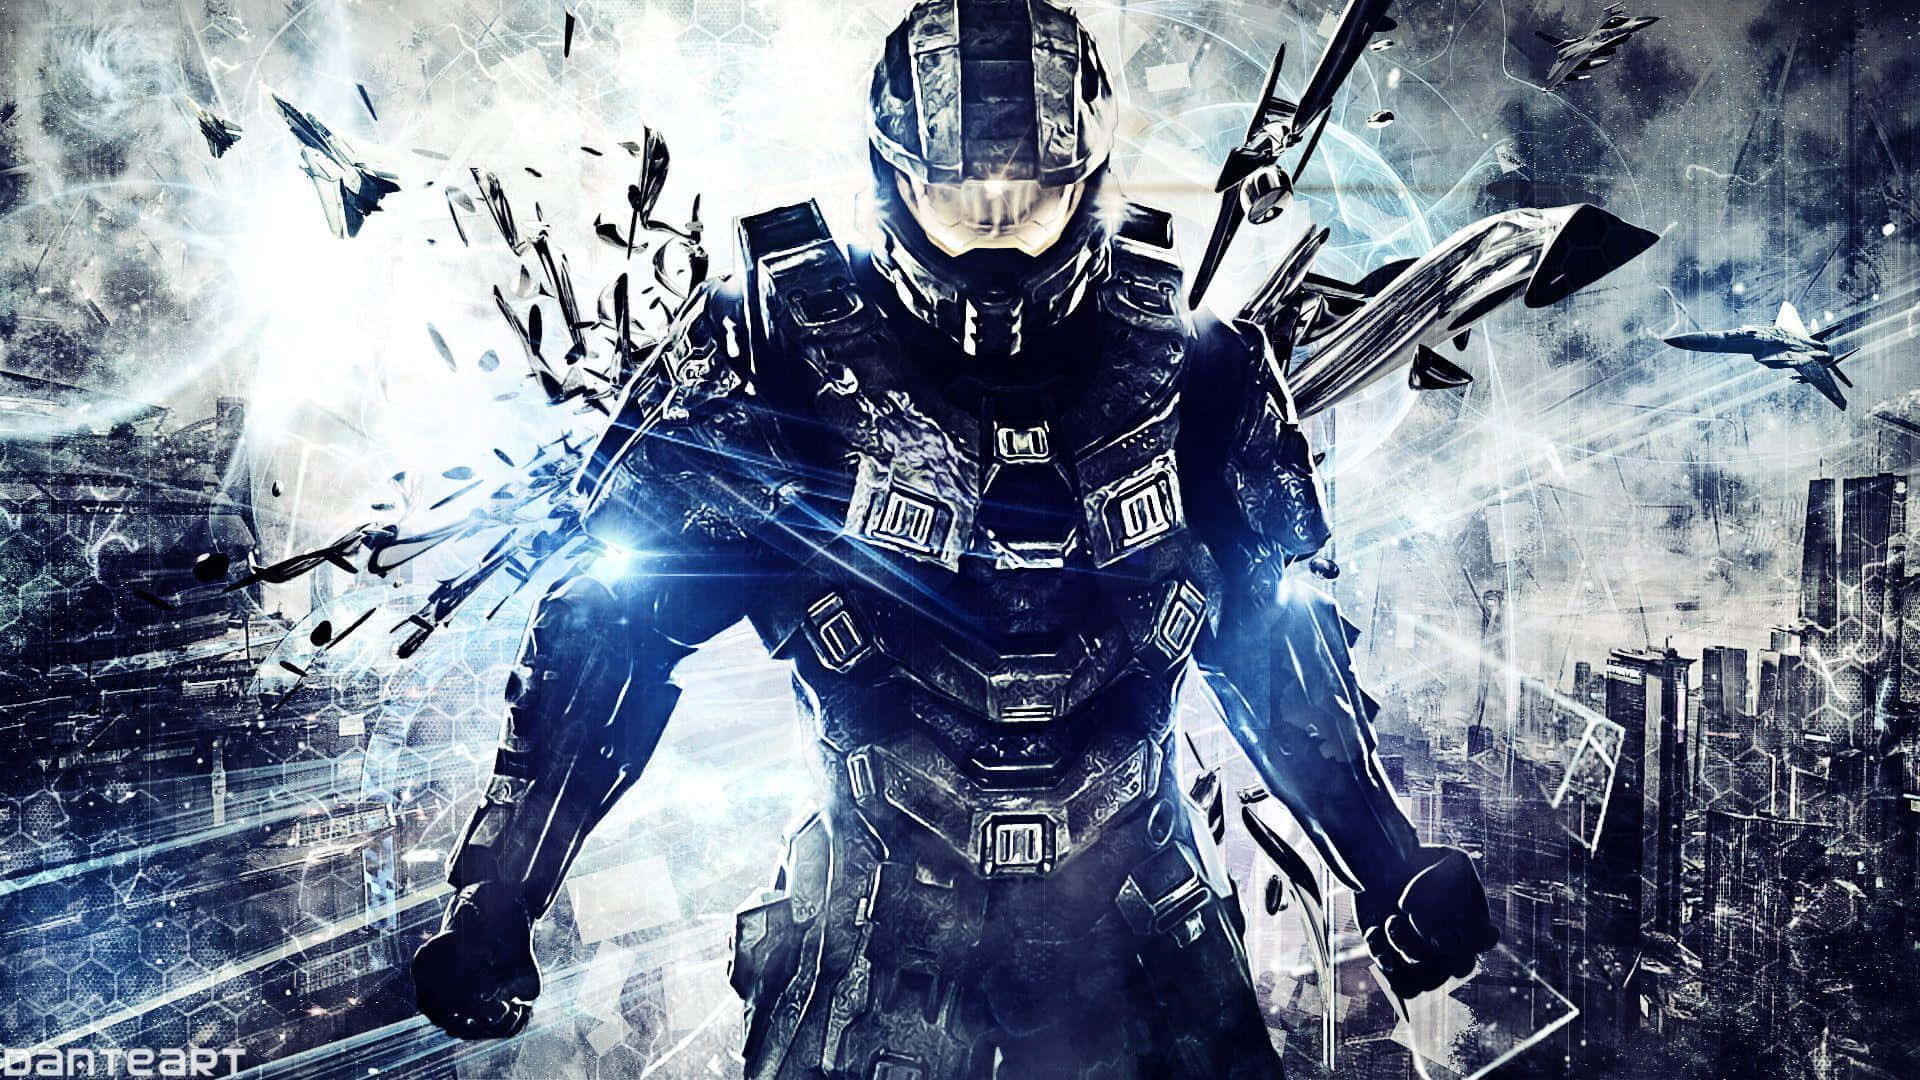 Cool Halo Shattering Armor Wallpaper